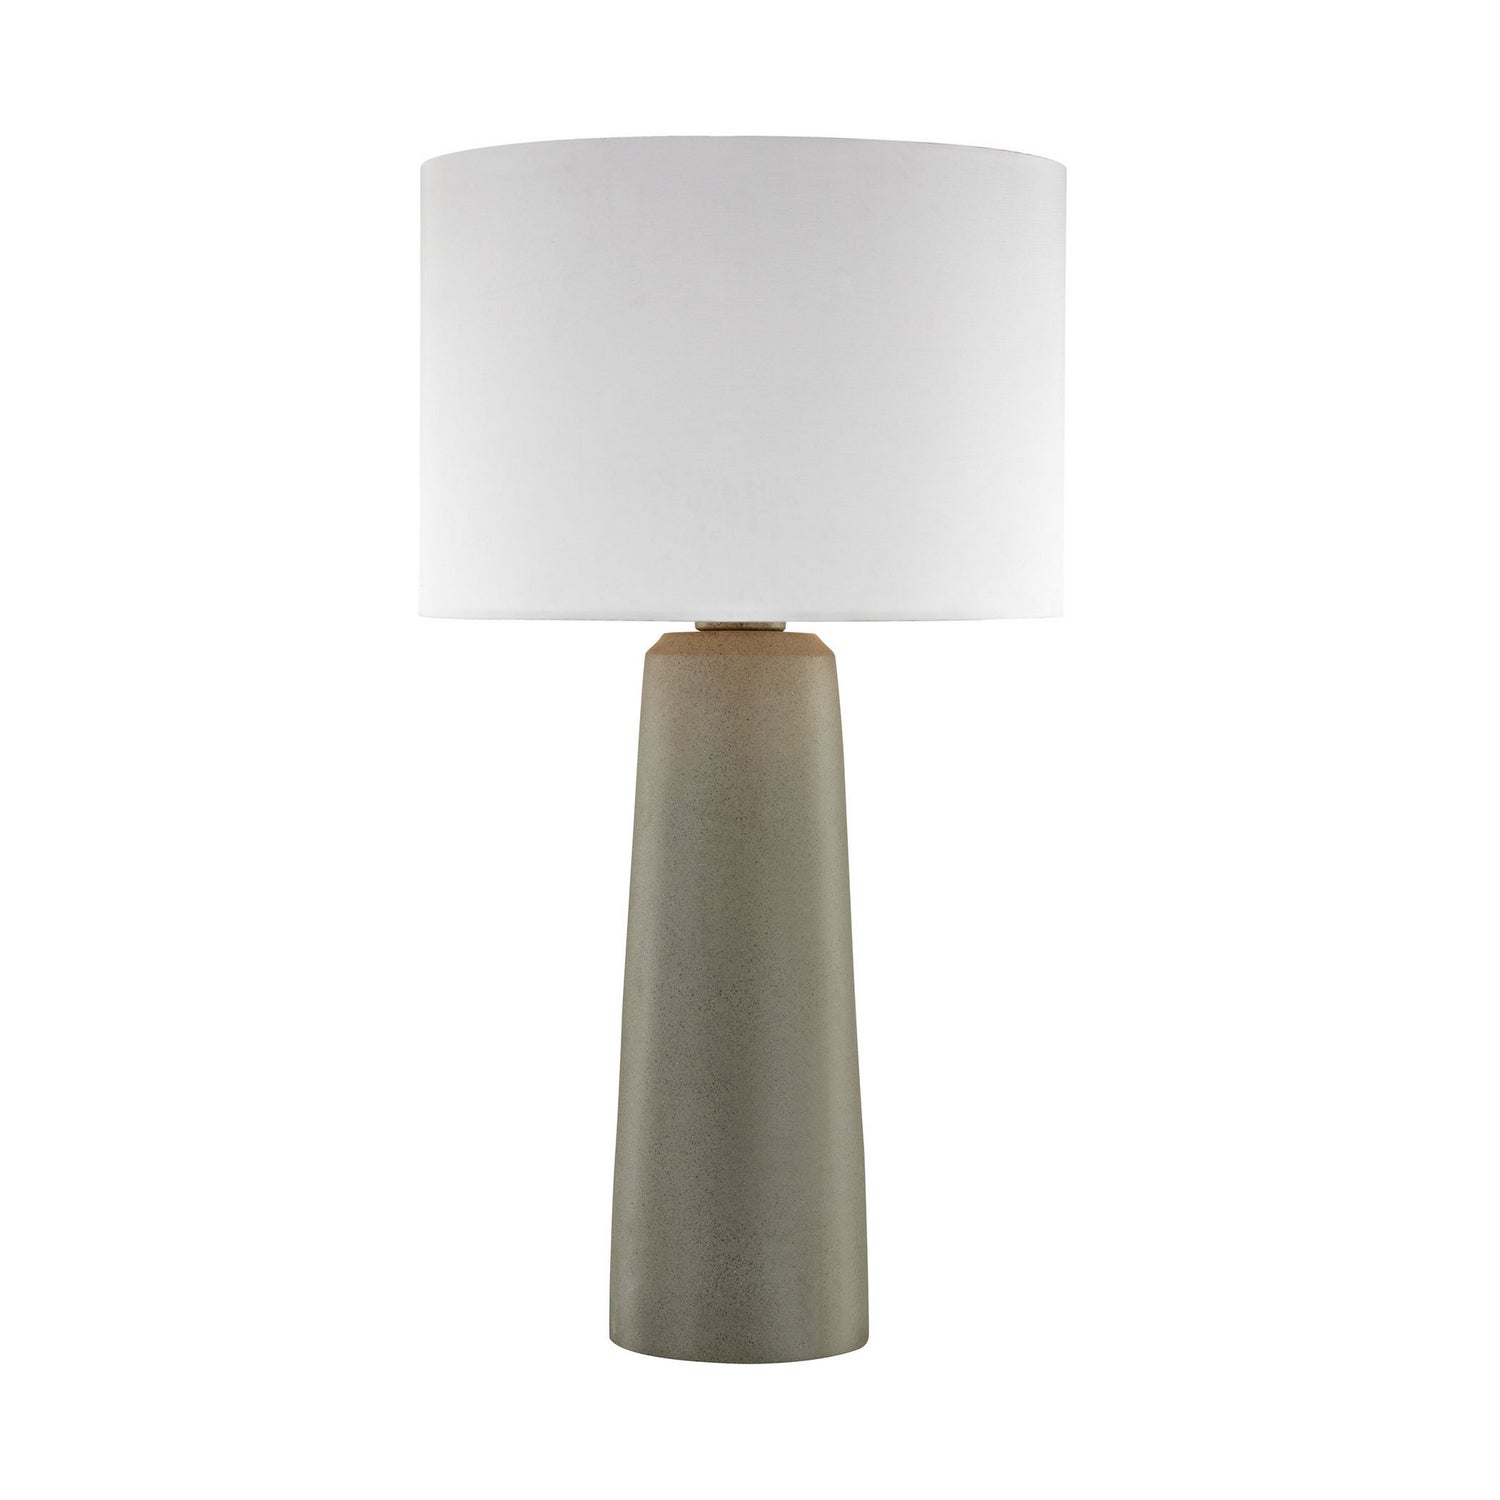 ELK Home - D3097 - One Light Table Lamp - Eilat - Polished Concrete